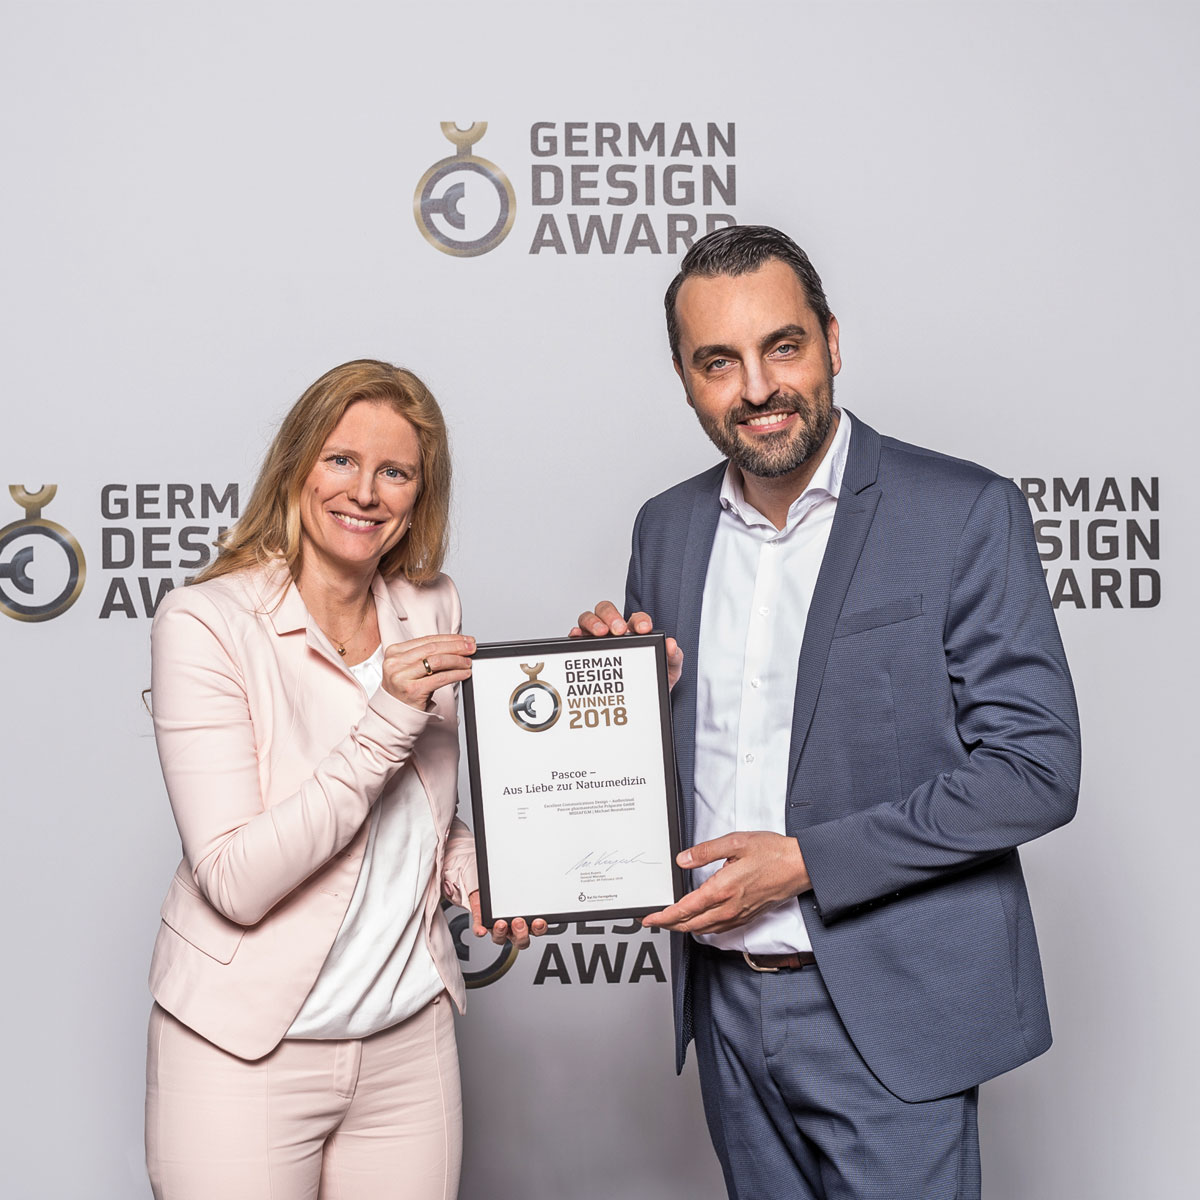 German Design Award 2018 for the Pascoe image clip